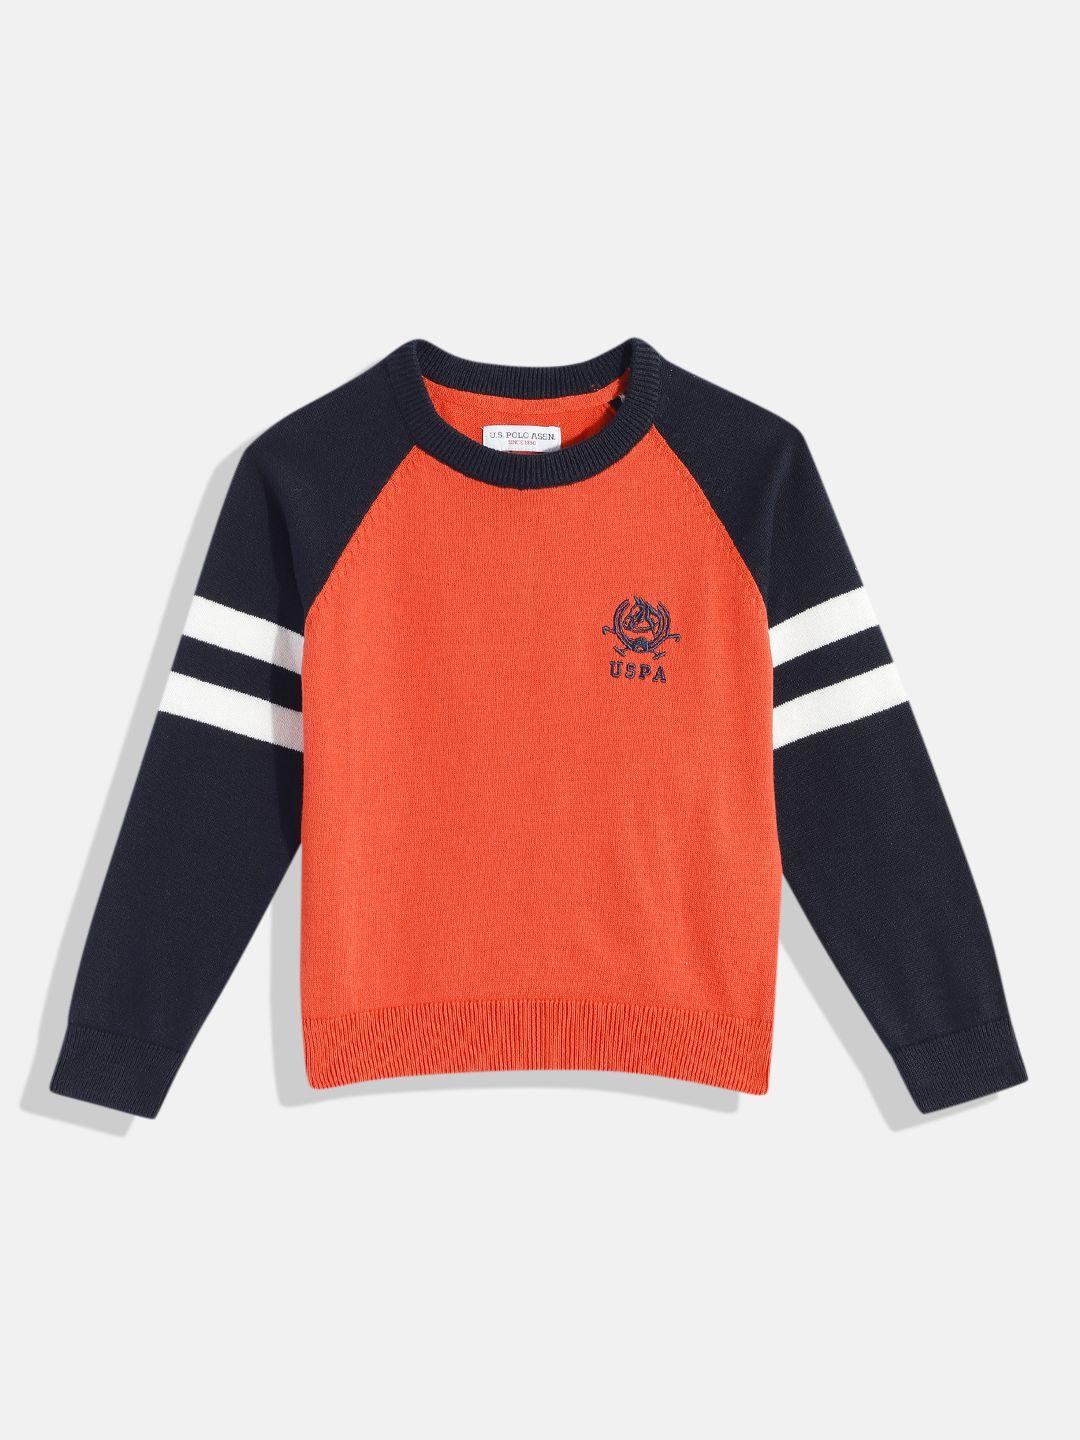 u-s-polo-assn-kids-boys-orange-raglan-sleeves-pullover